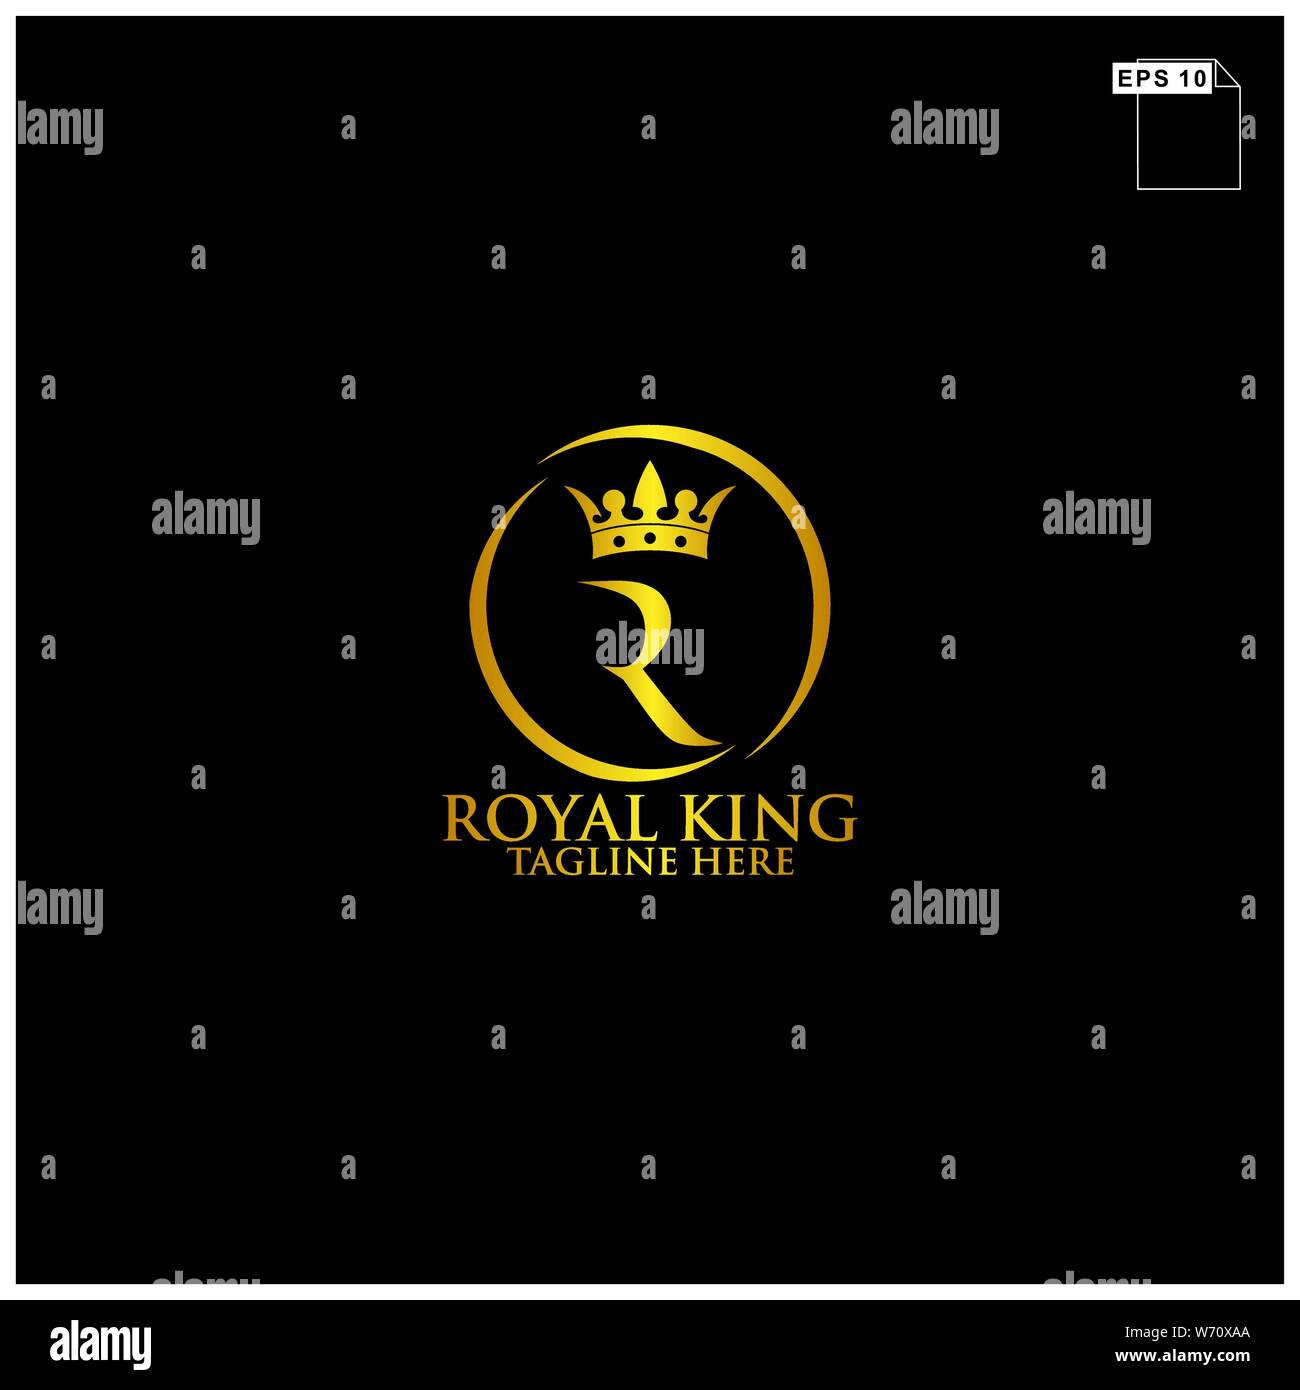 royal brand name logo design concept with floral and elemnt gold color ...